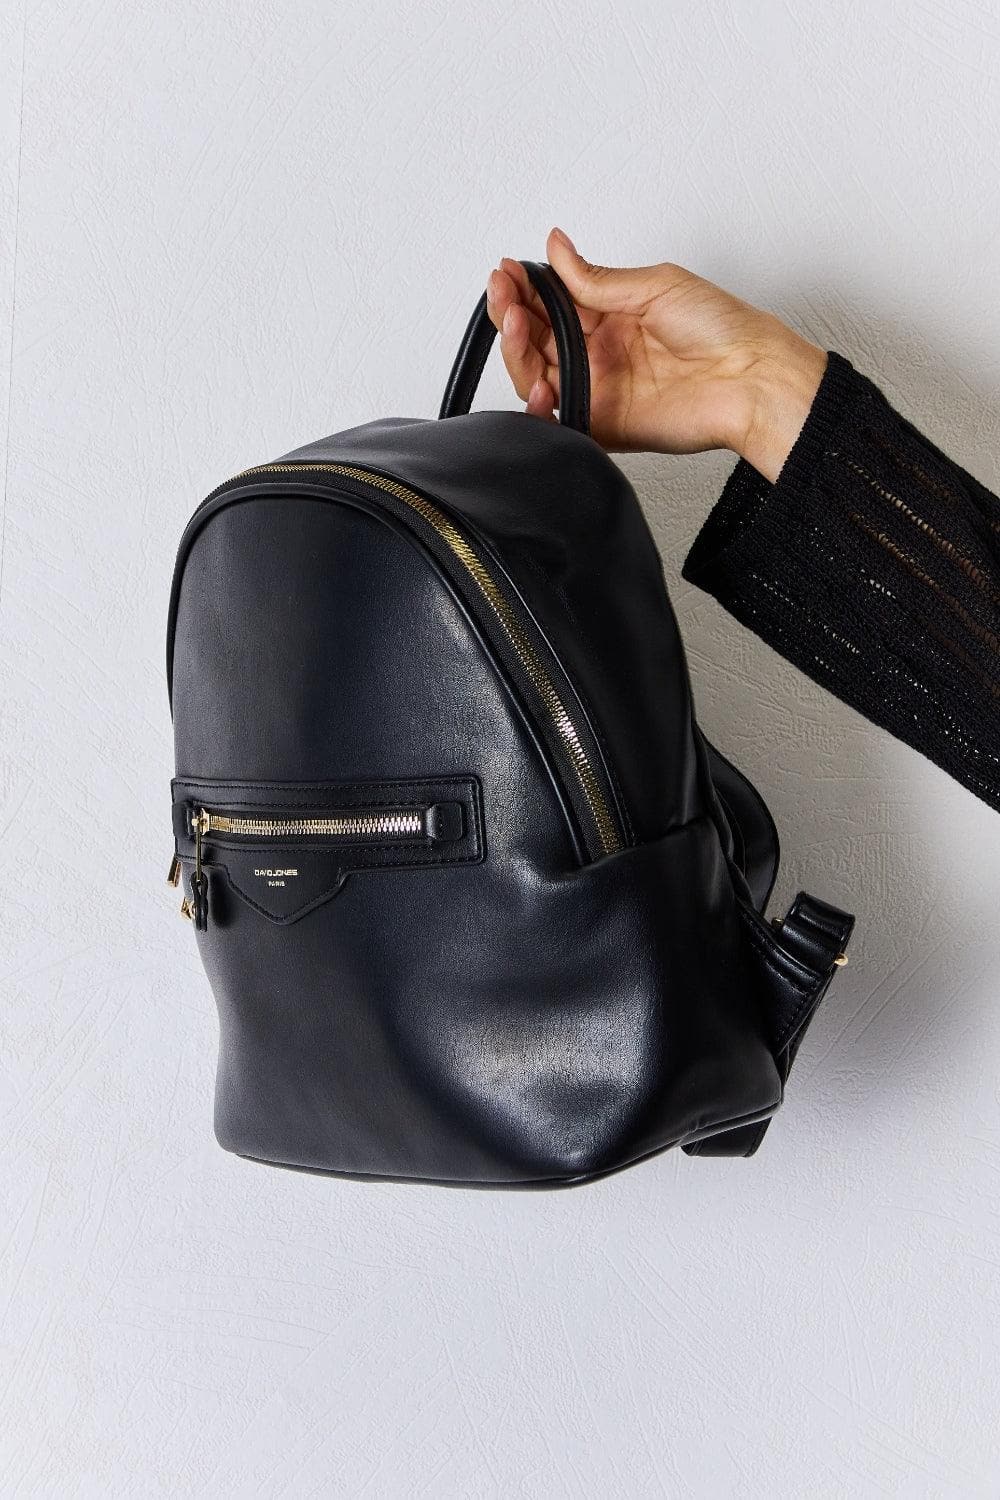 David Jones PU Leather Backpack - SwagglyLife Home & Fashion